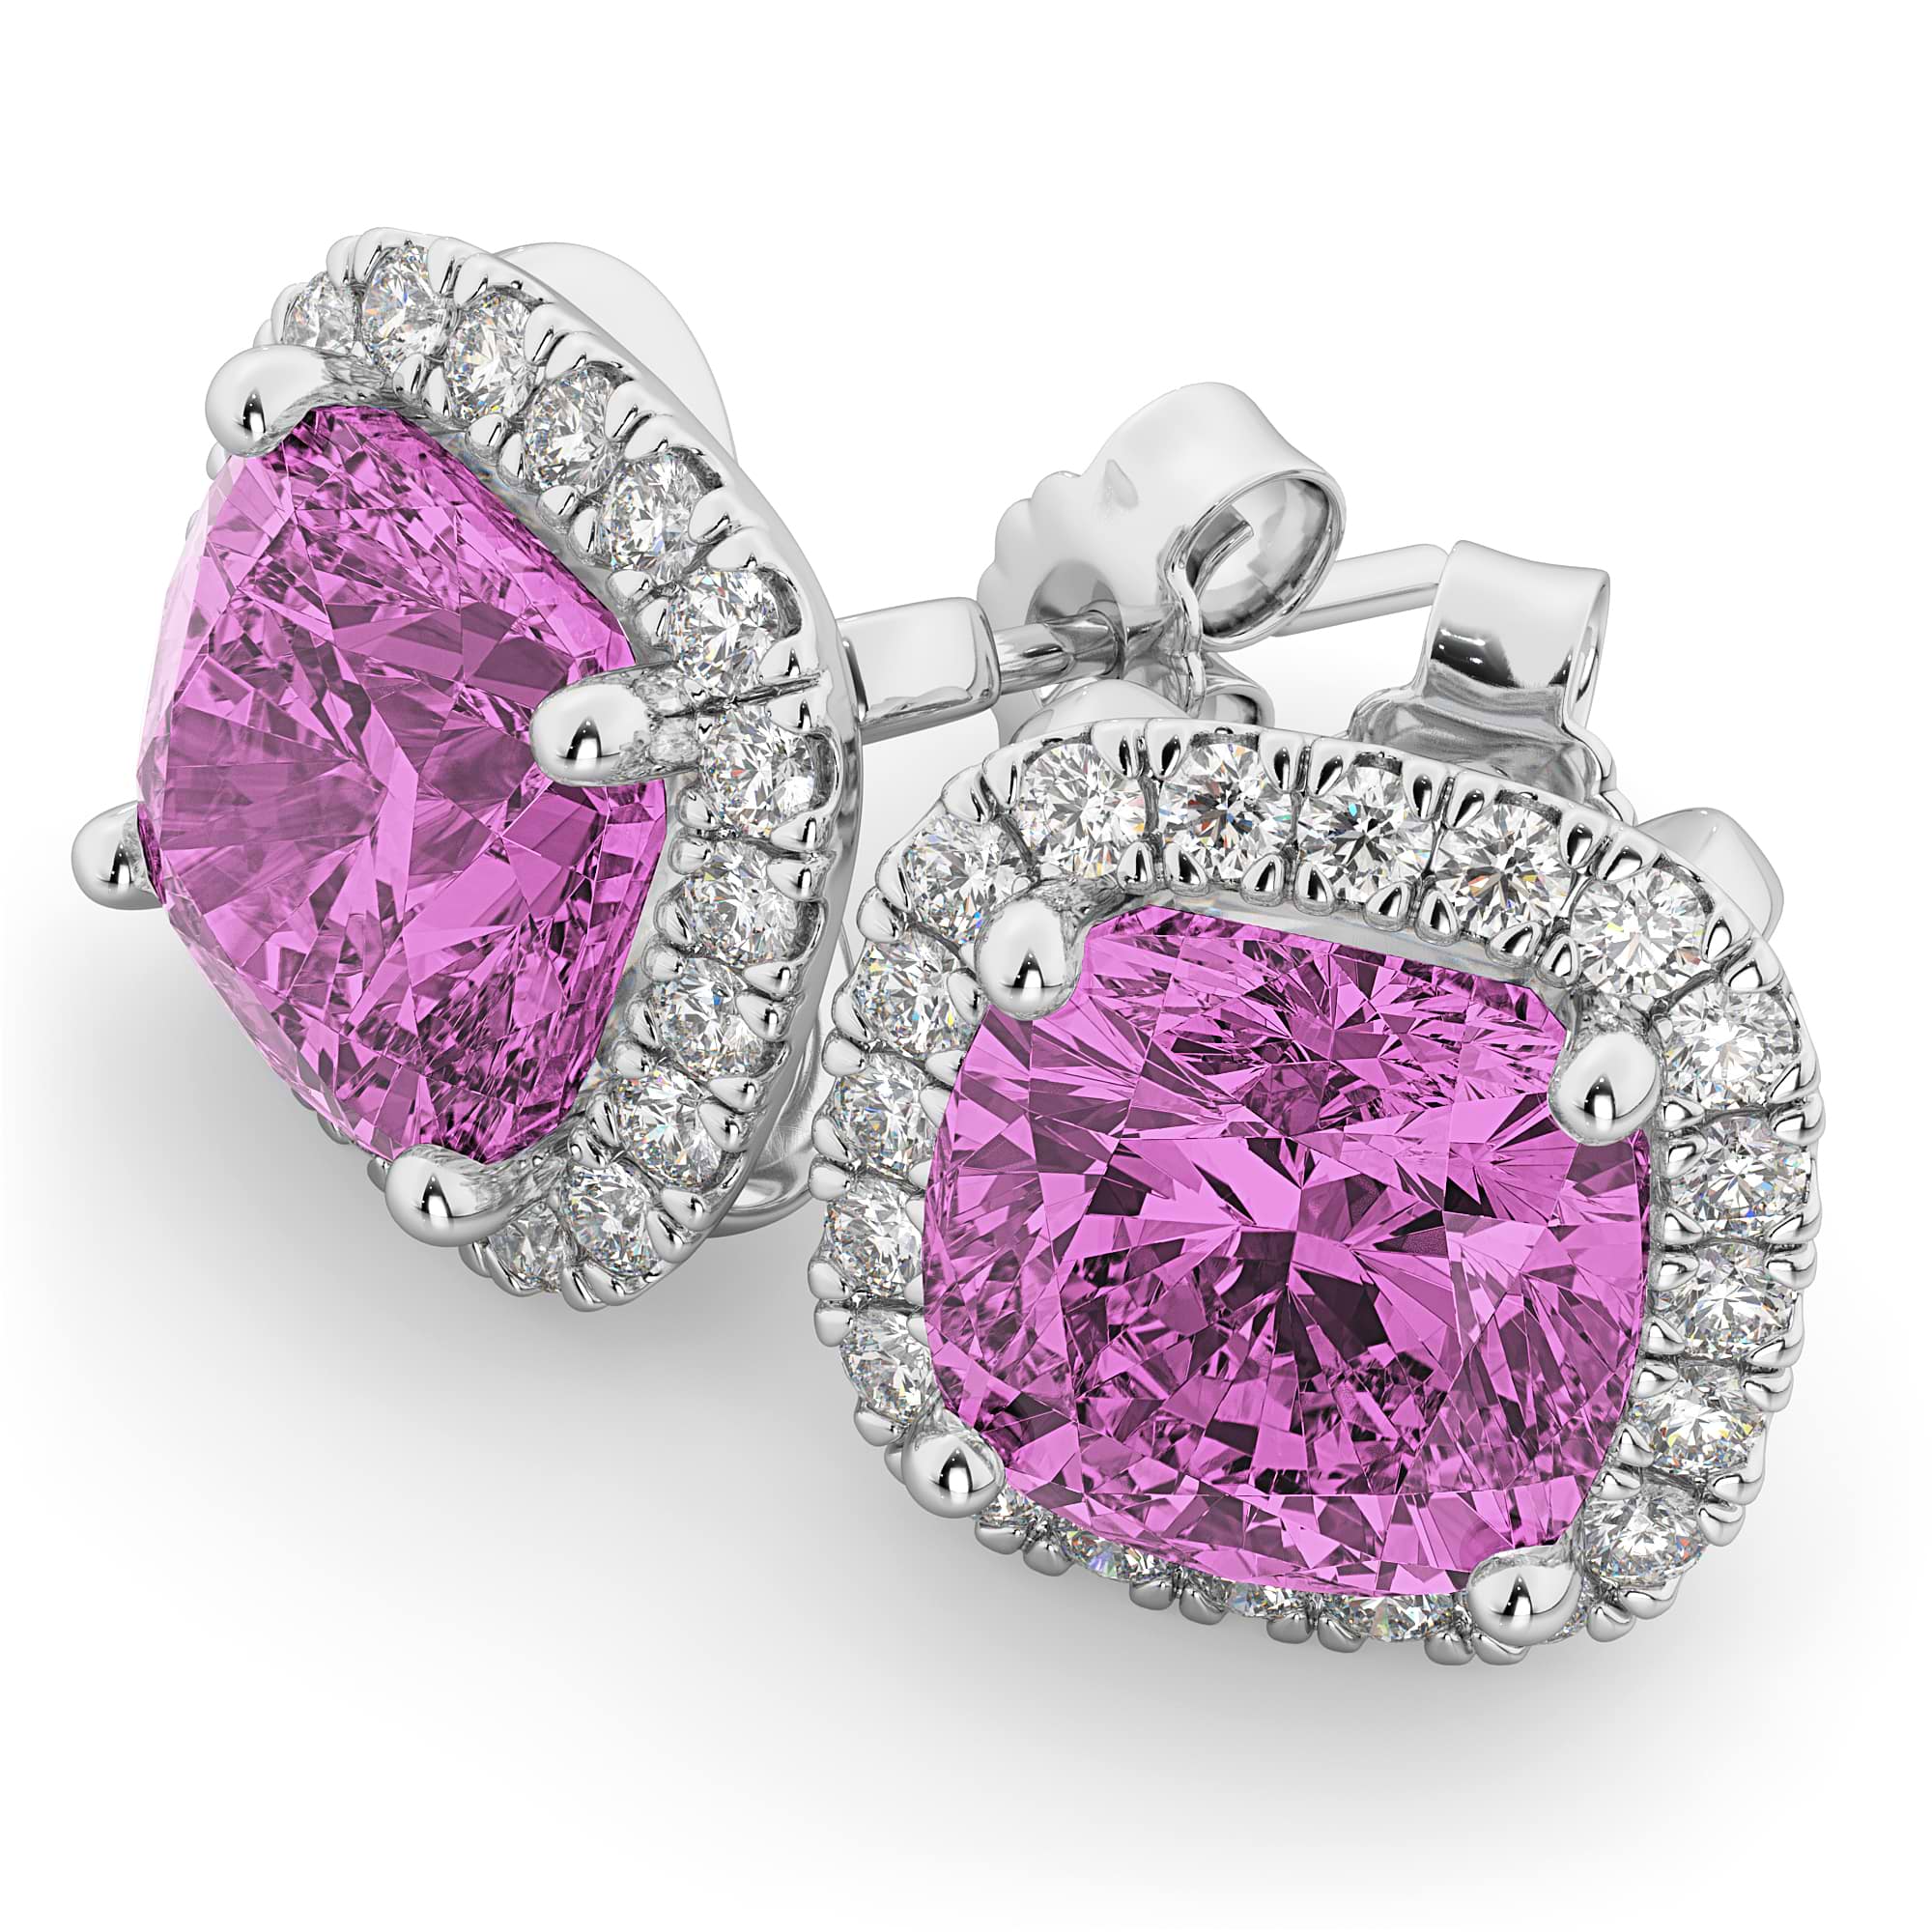 Halo Cushion Pink Sapphire & Diamond Earrings 14k White Gold (4.04ct)